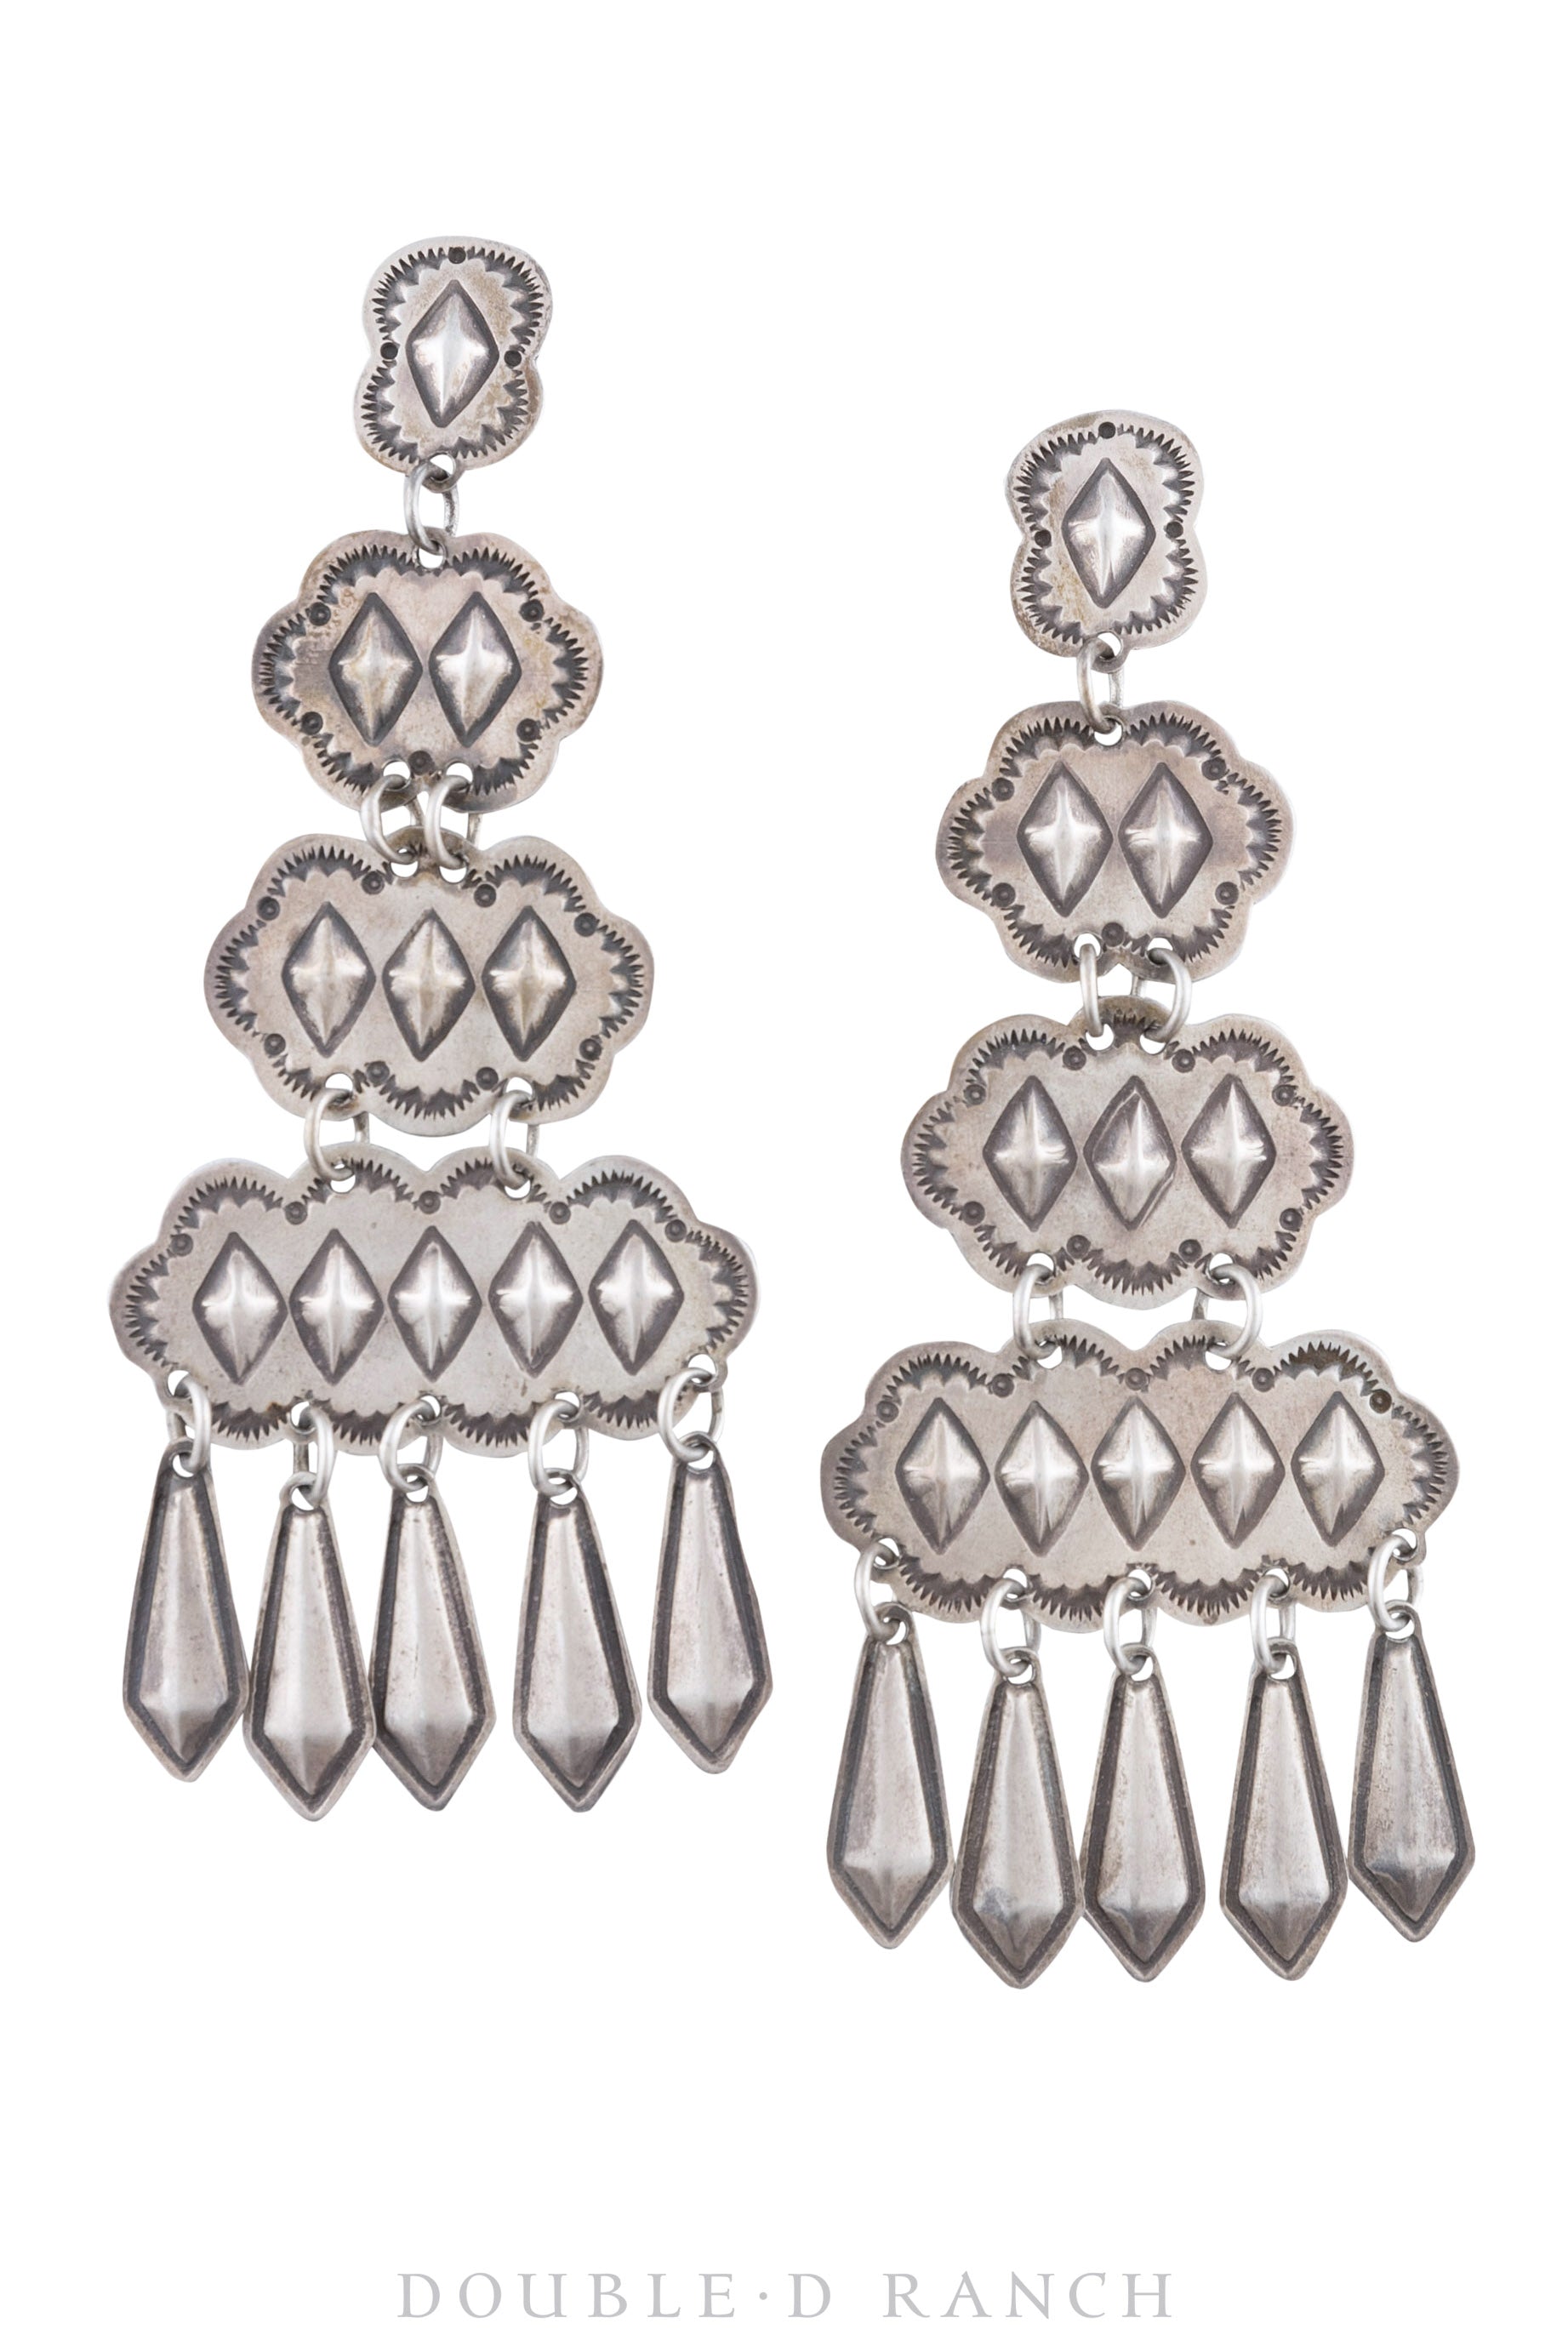 Earrings, Repurposed, Chandelier, Sterling Silver, Hallmark, Contemporary, 1050